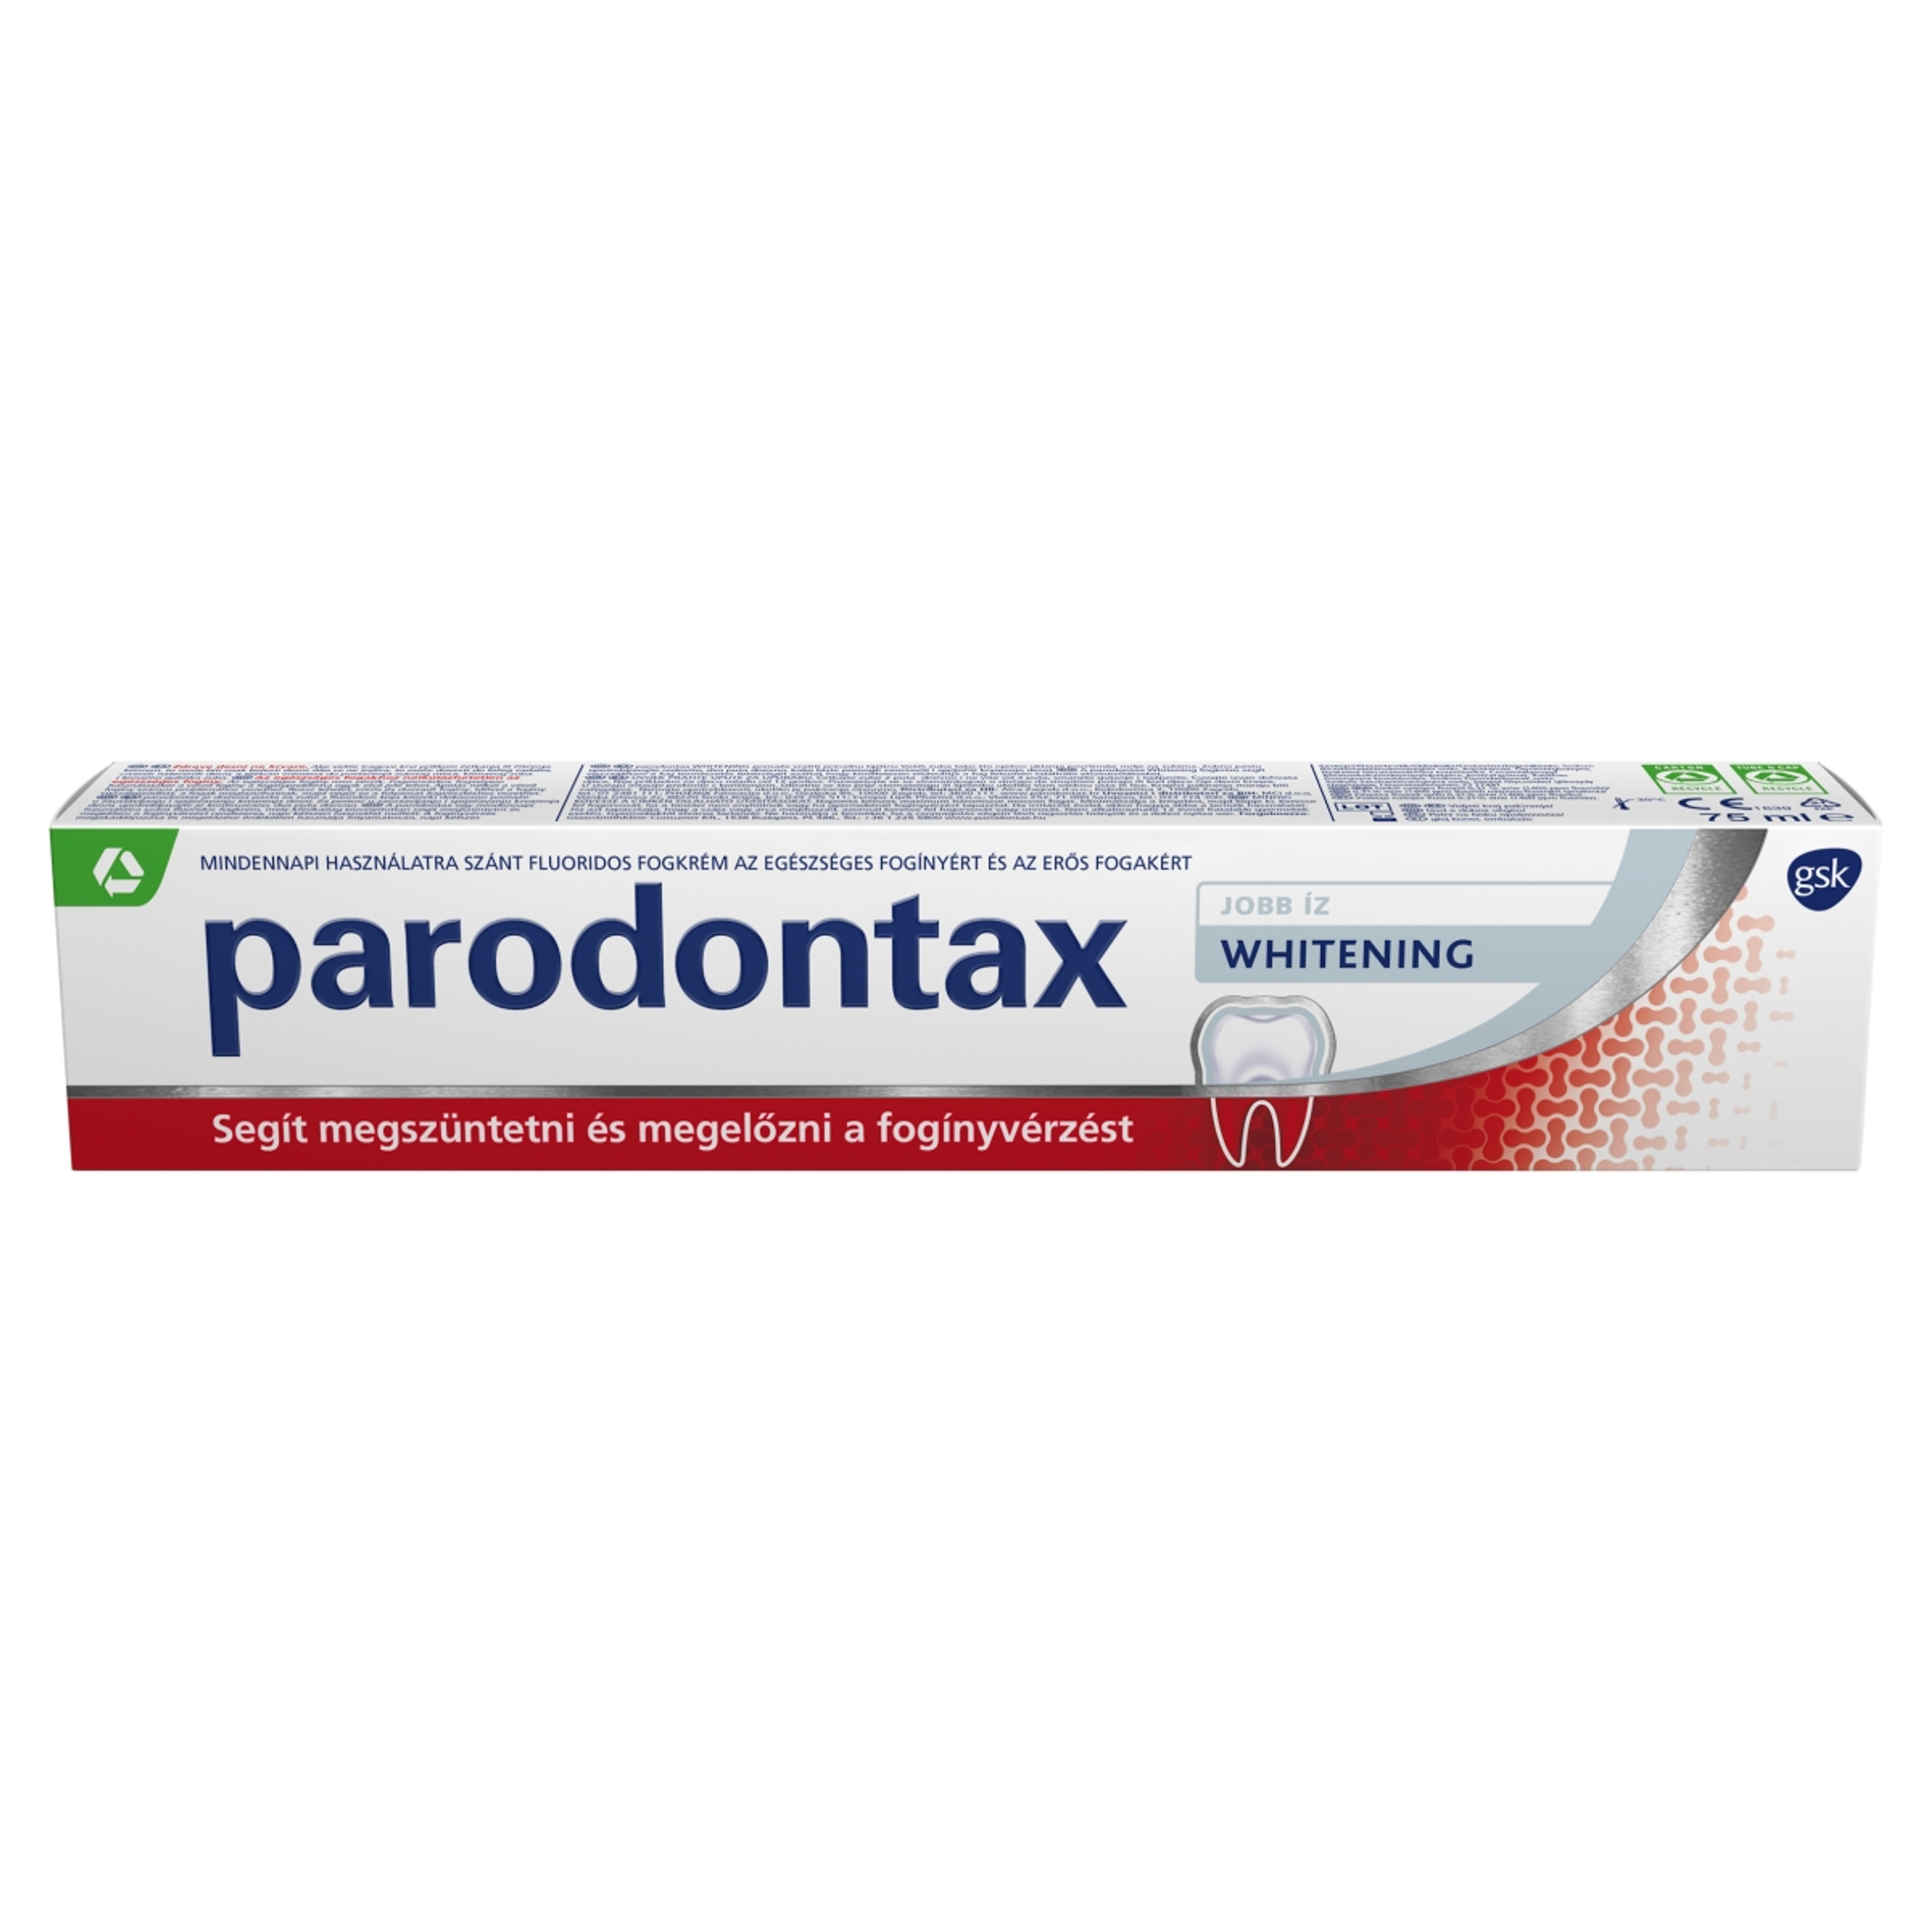 Parodontax Whitening fogkrém - 75 ml